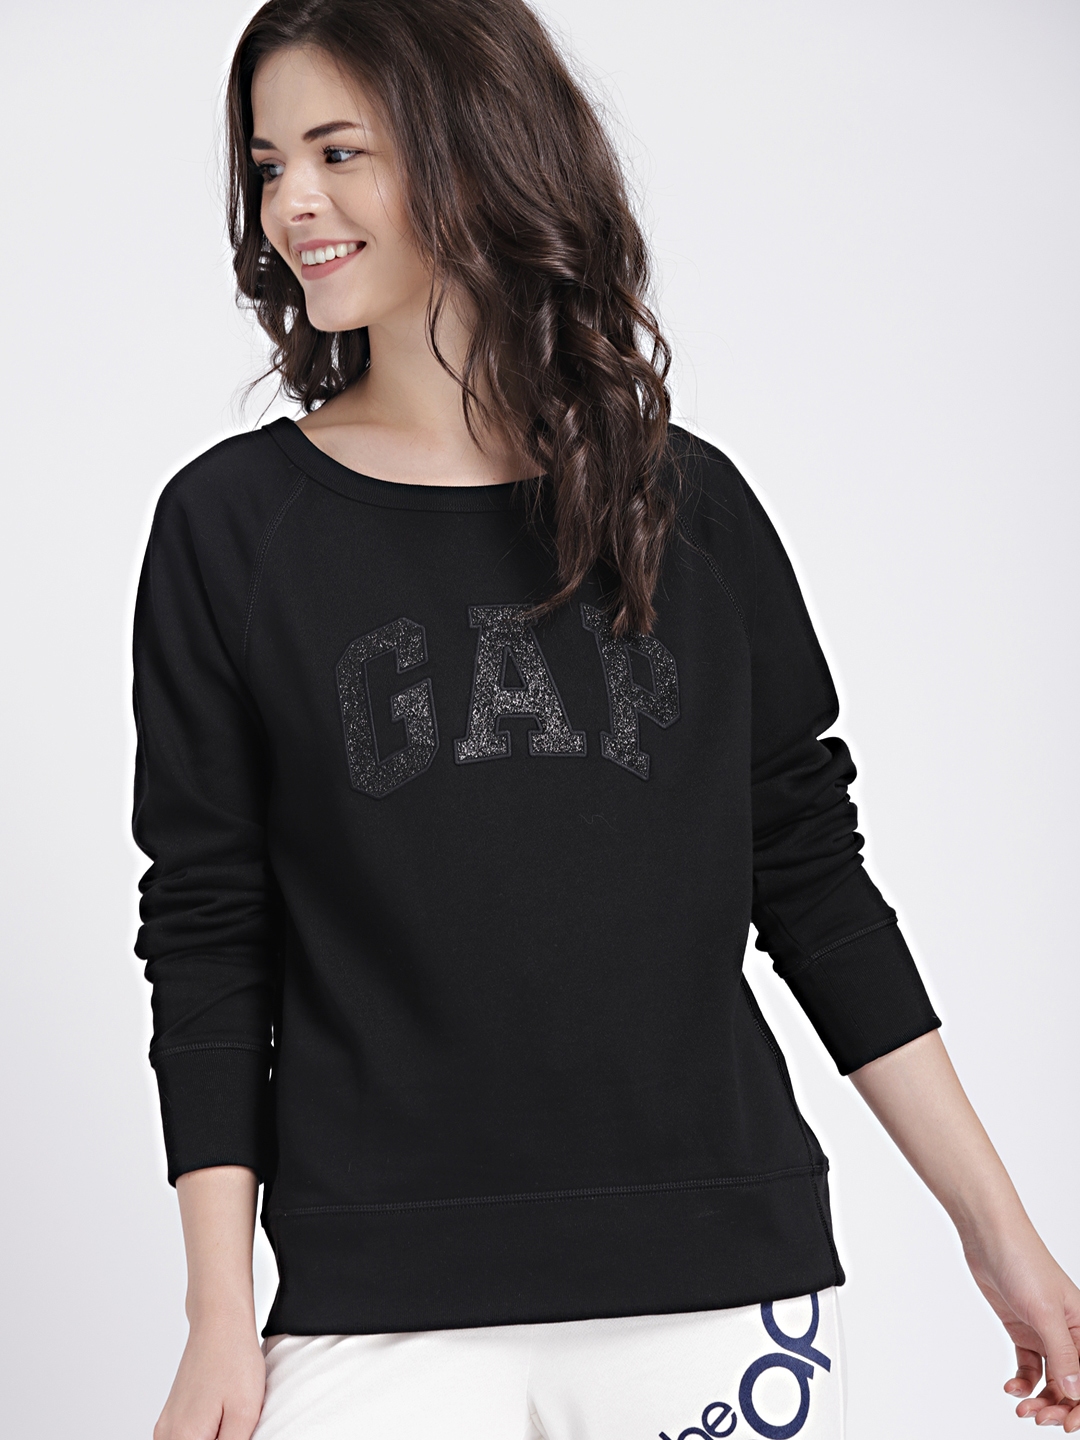 black gap sweatshirt